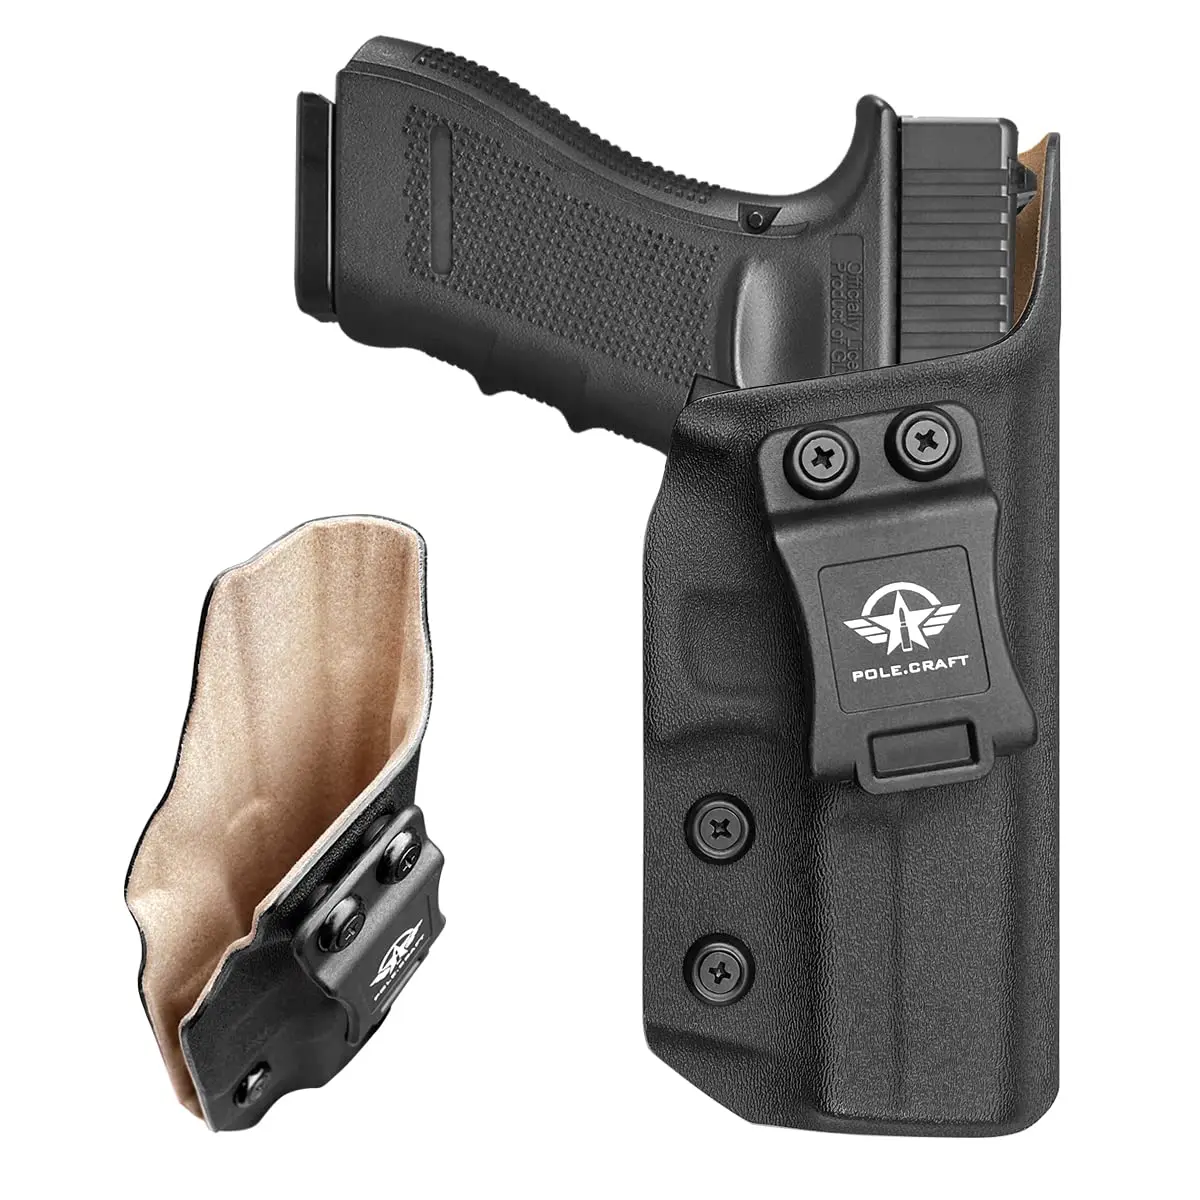 

POLE.CRAFT IWB Kydex Leather Holster Fit: Glock 17 Gen 1 2 3 4 5 / Glock 22 31 Gen 3 4 Pistol Case - Inside Waistband Concealed